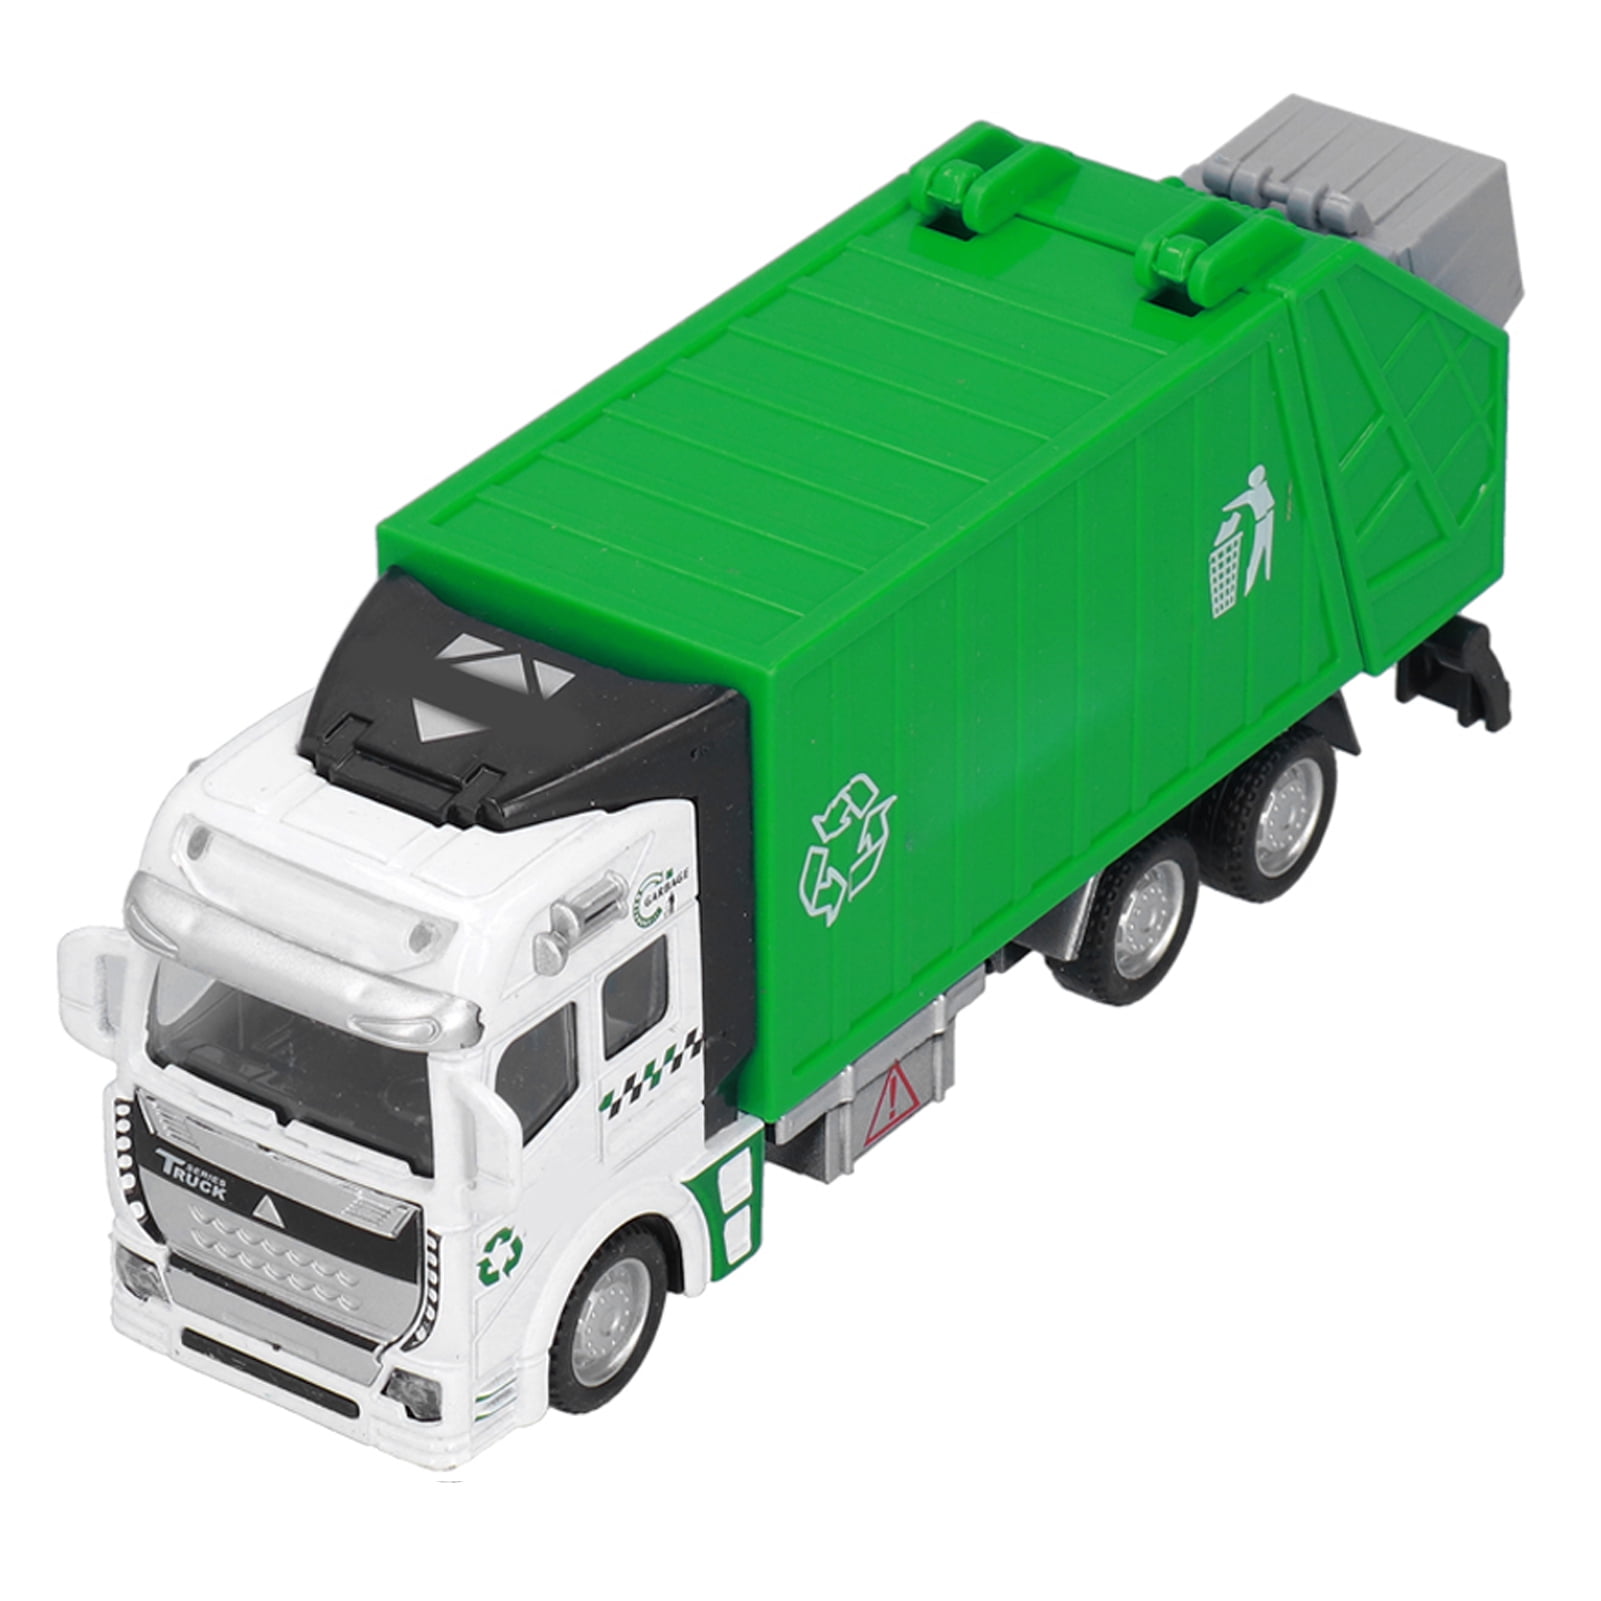 1:48 Garbage Dump Truck Trash Bin Can Model Car Diecast Toy Vehicle Green Kids 